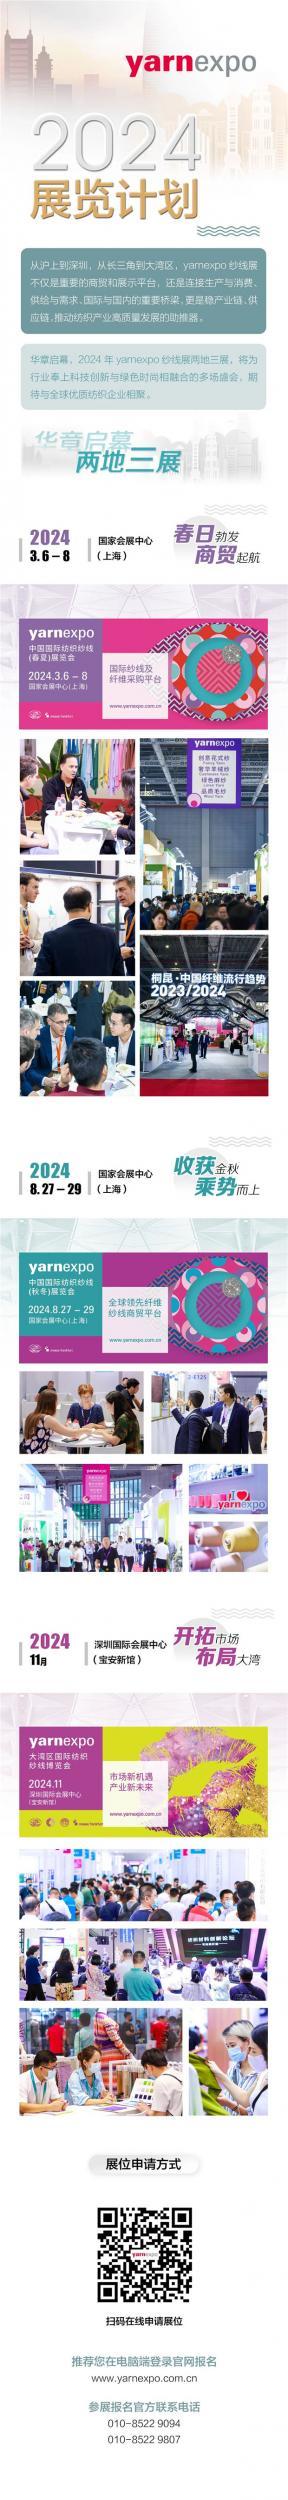 yarnexpo纱线展2024年展览计划